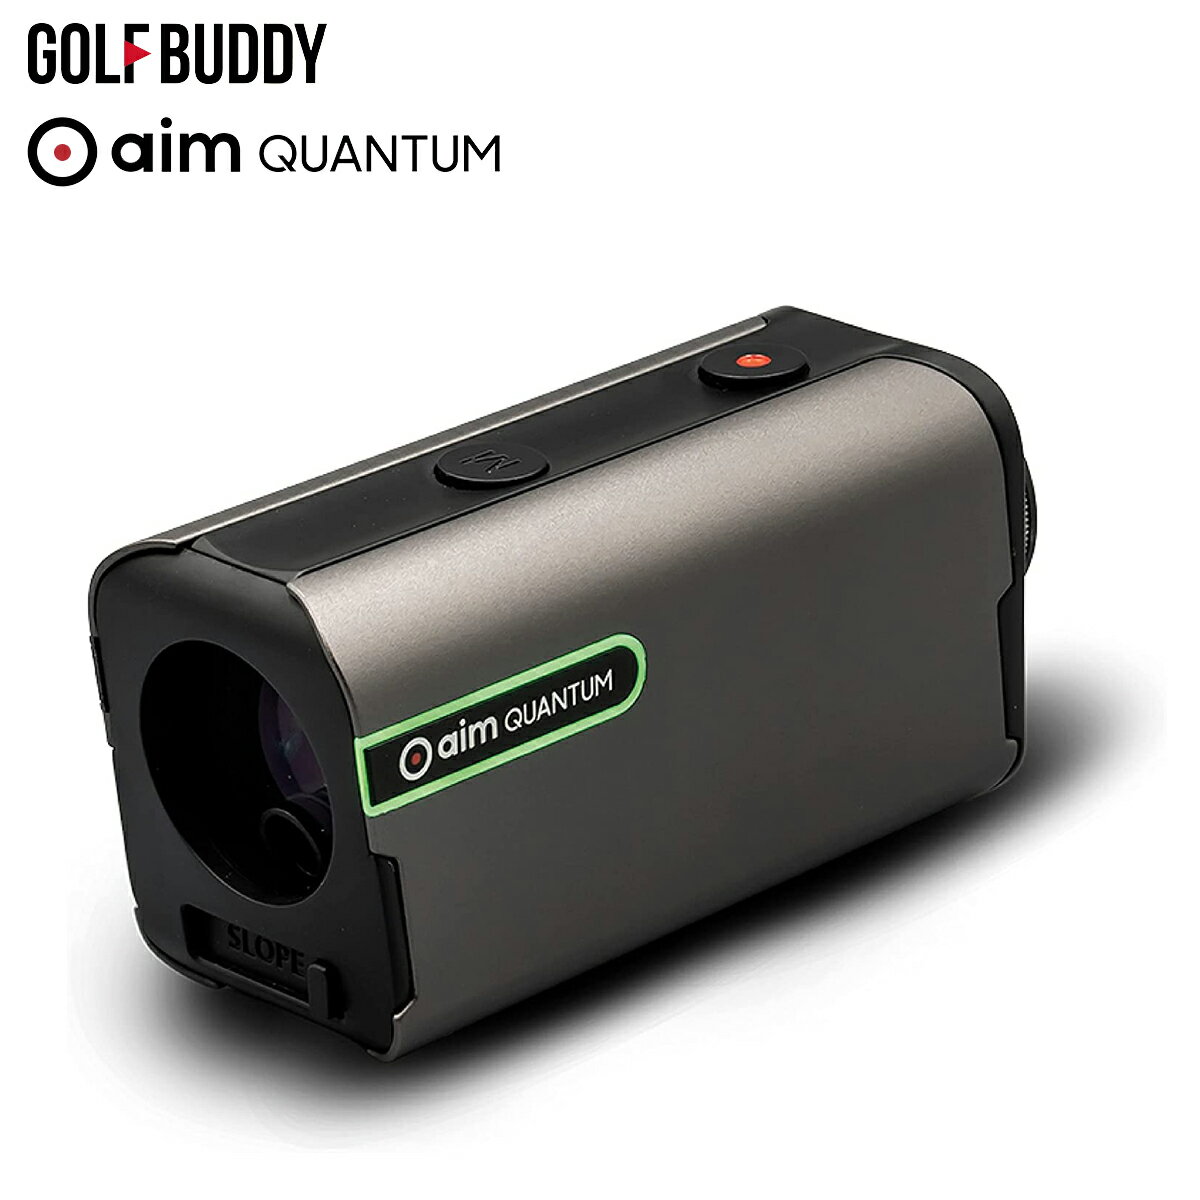 GOLFBUDDY ゴルフバディ正規品 aim Quantum エイム クオンタム 「ゴルフ用レーザー距離計」 